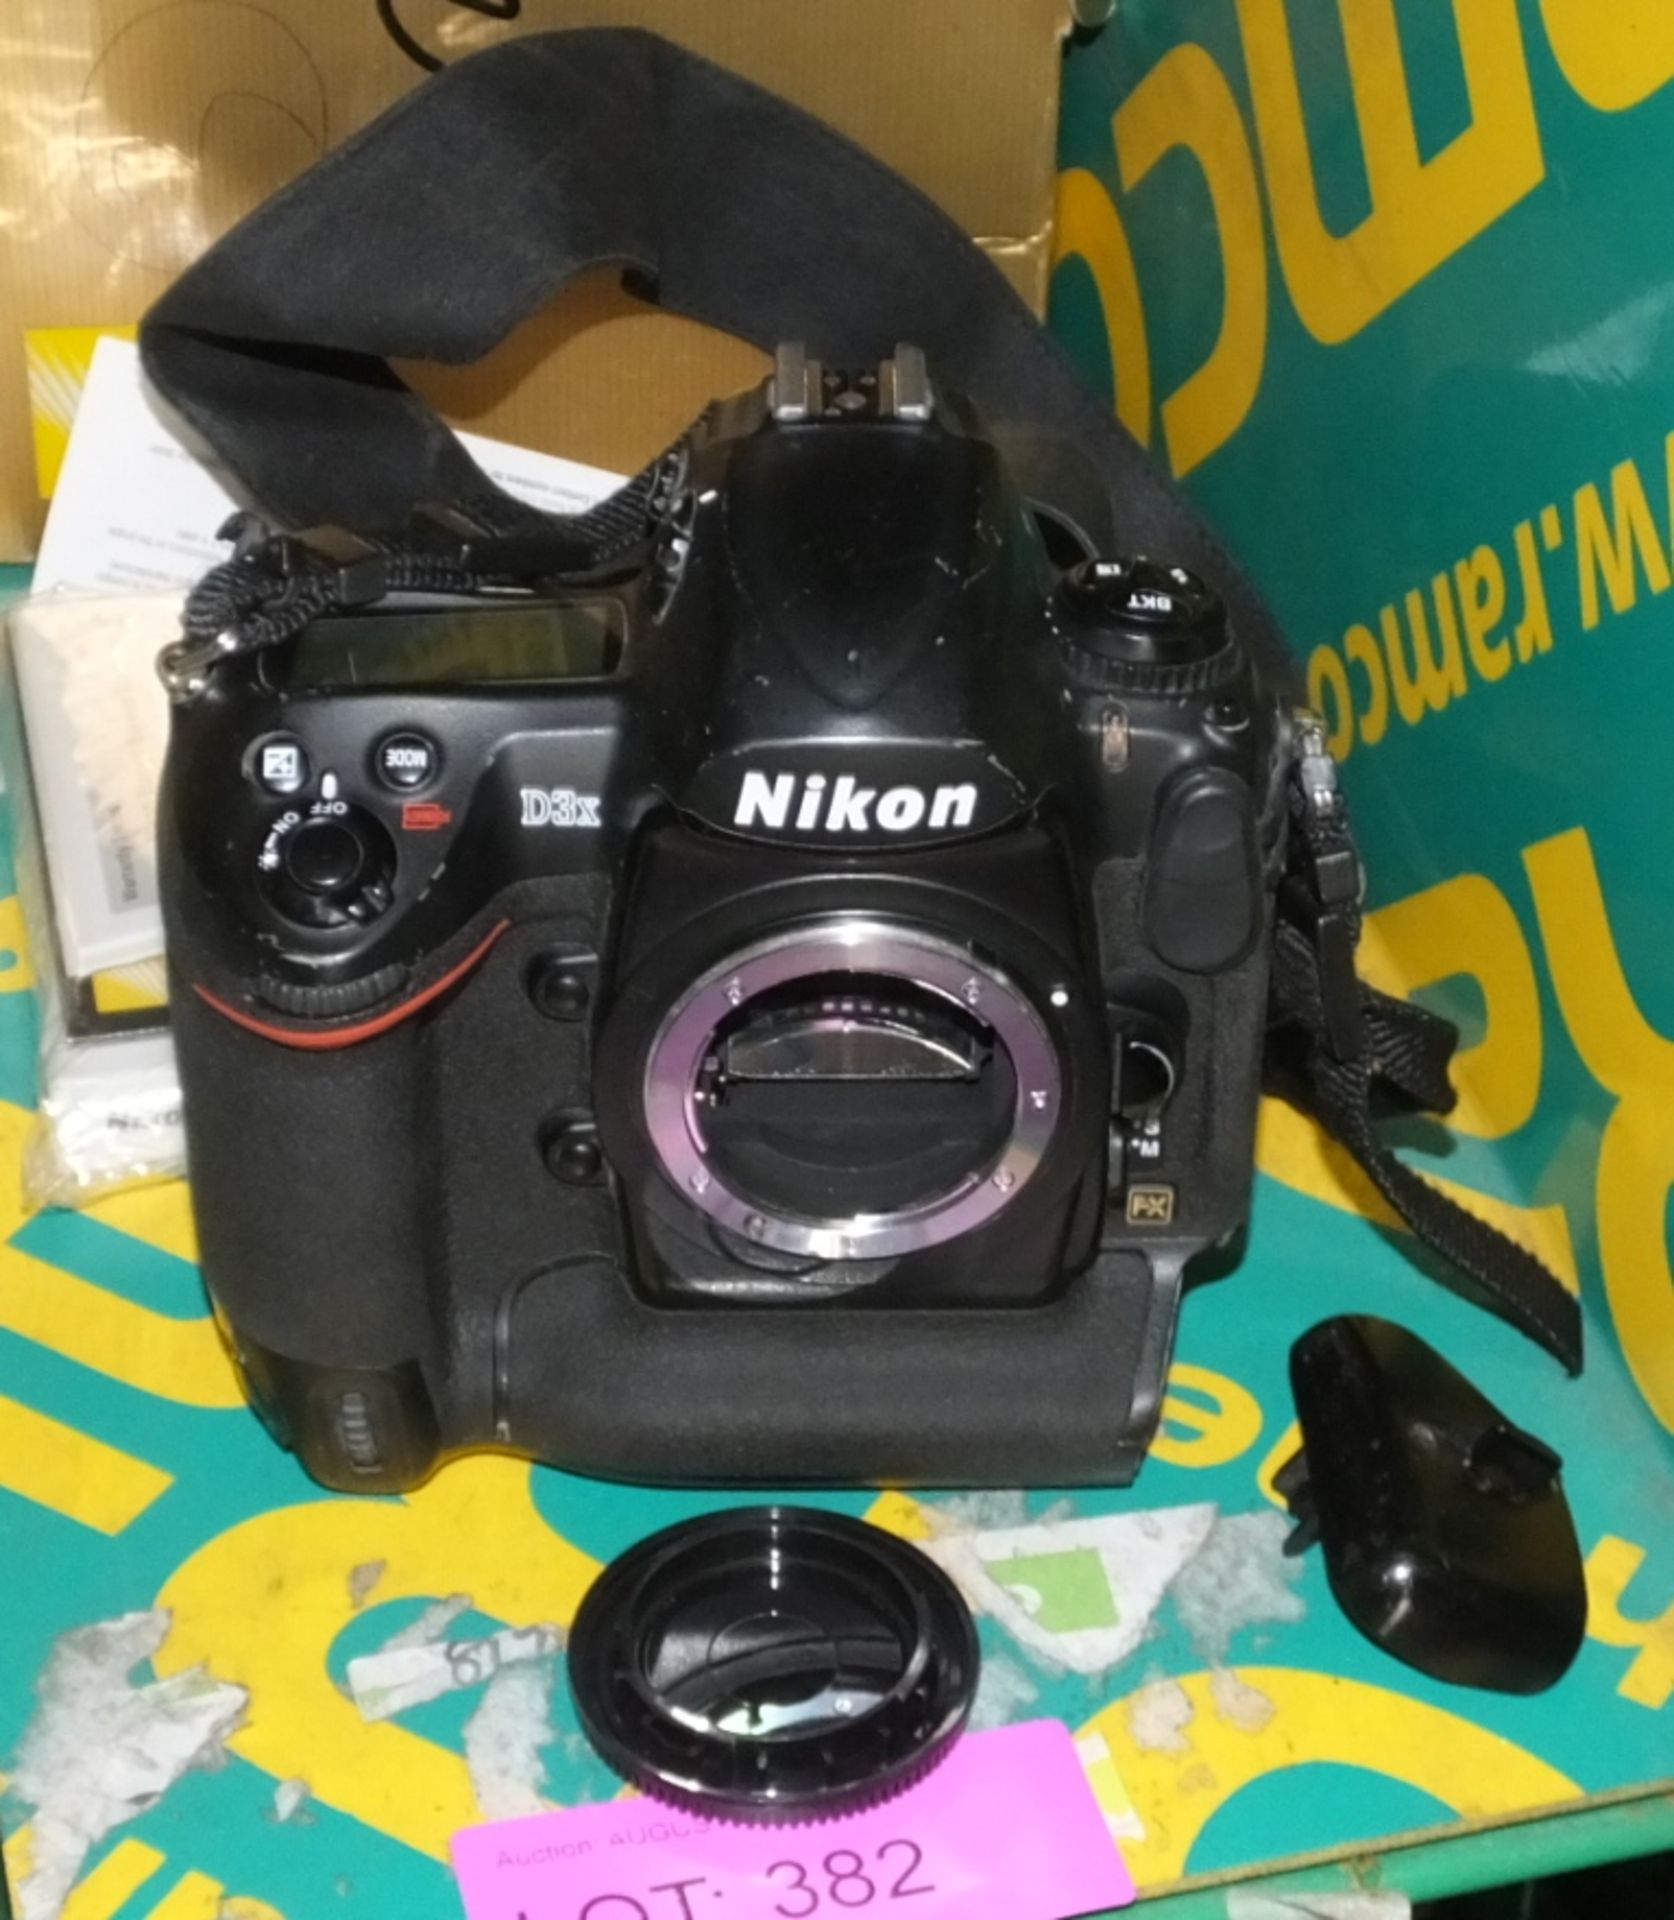 Nikon D3x Camera Body - no battery